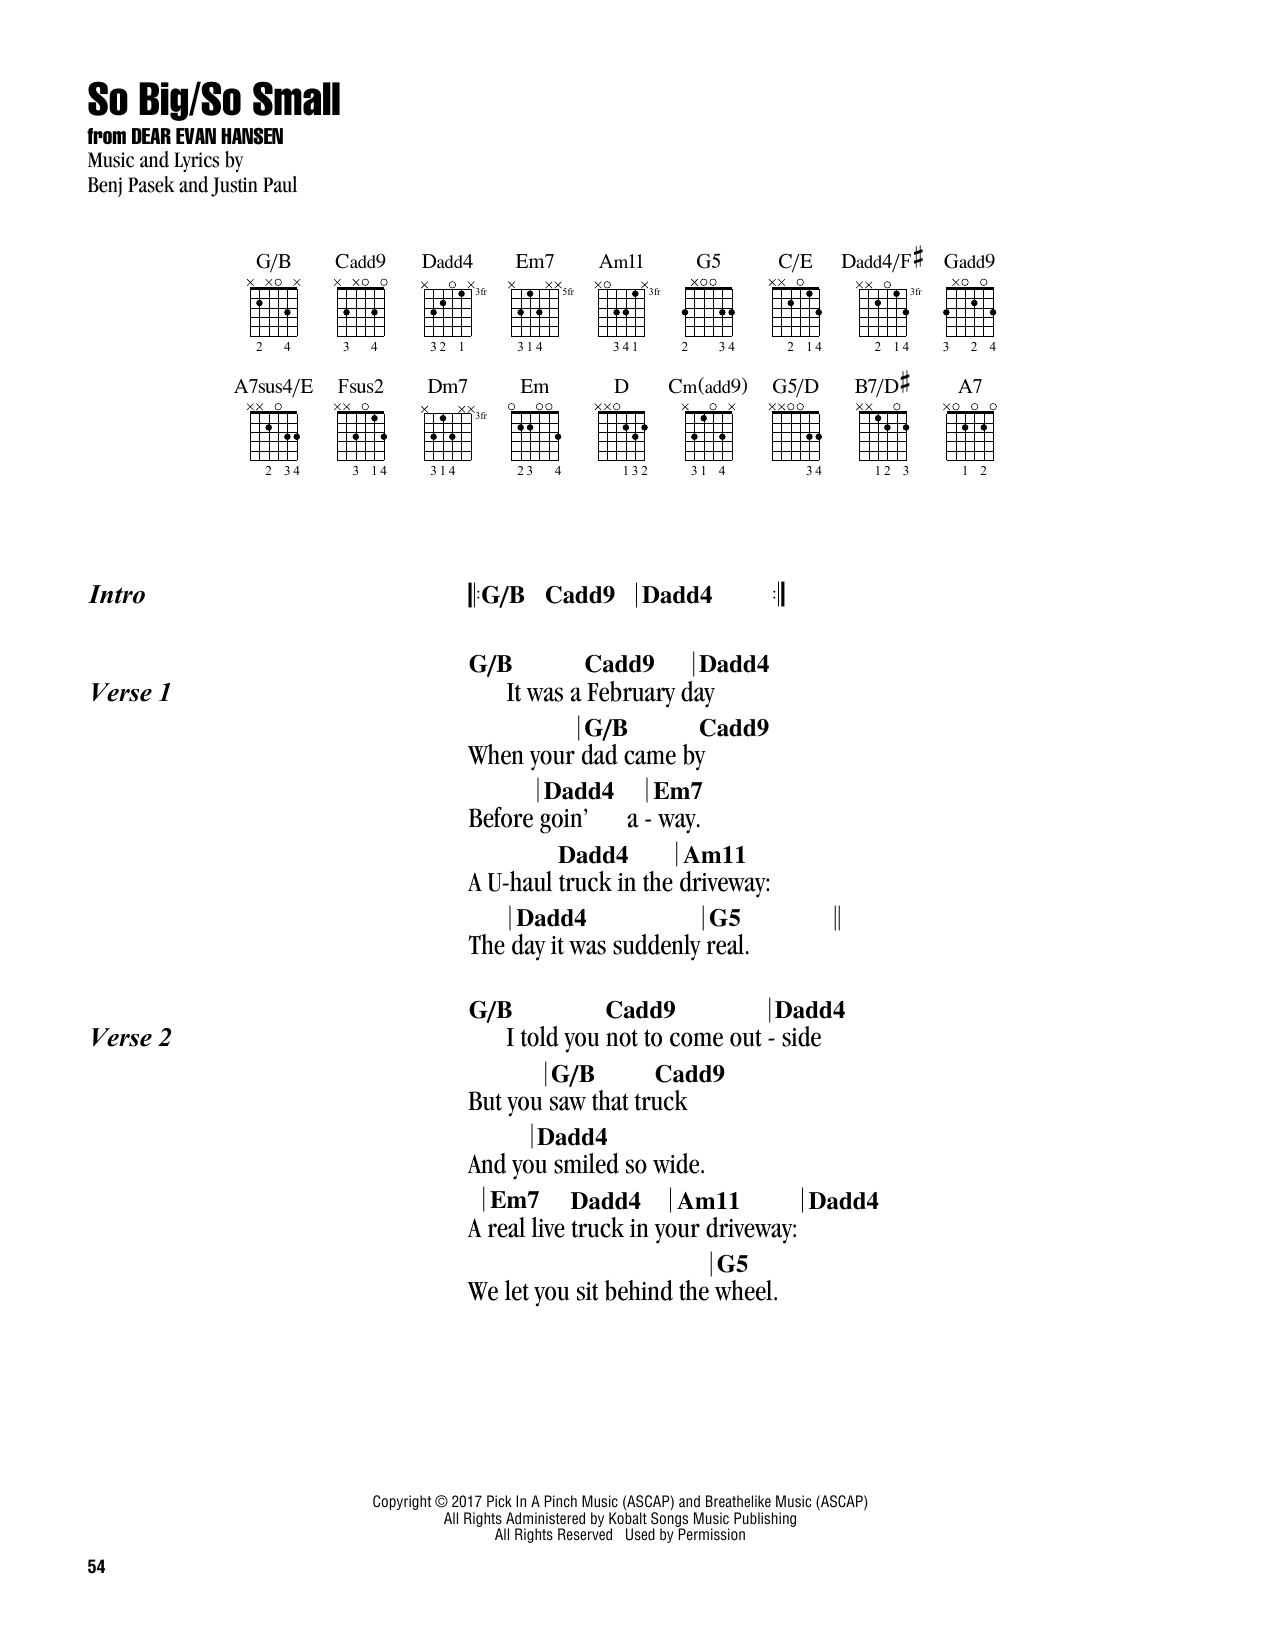 Download Pasek & Paul So Big/So Small (from Dear Evan Hansen) Sheet Music